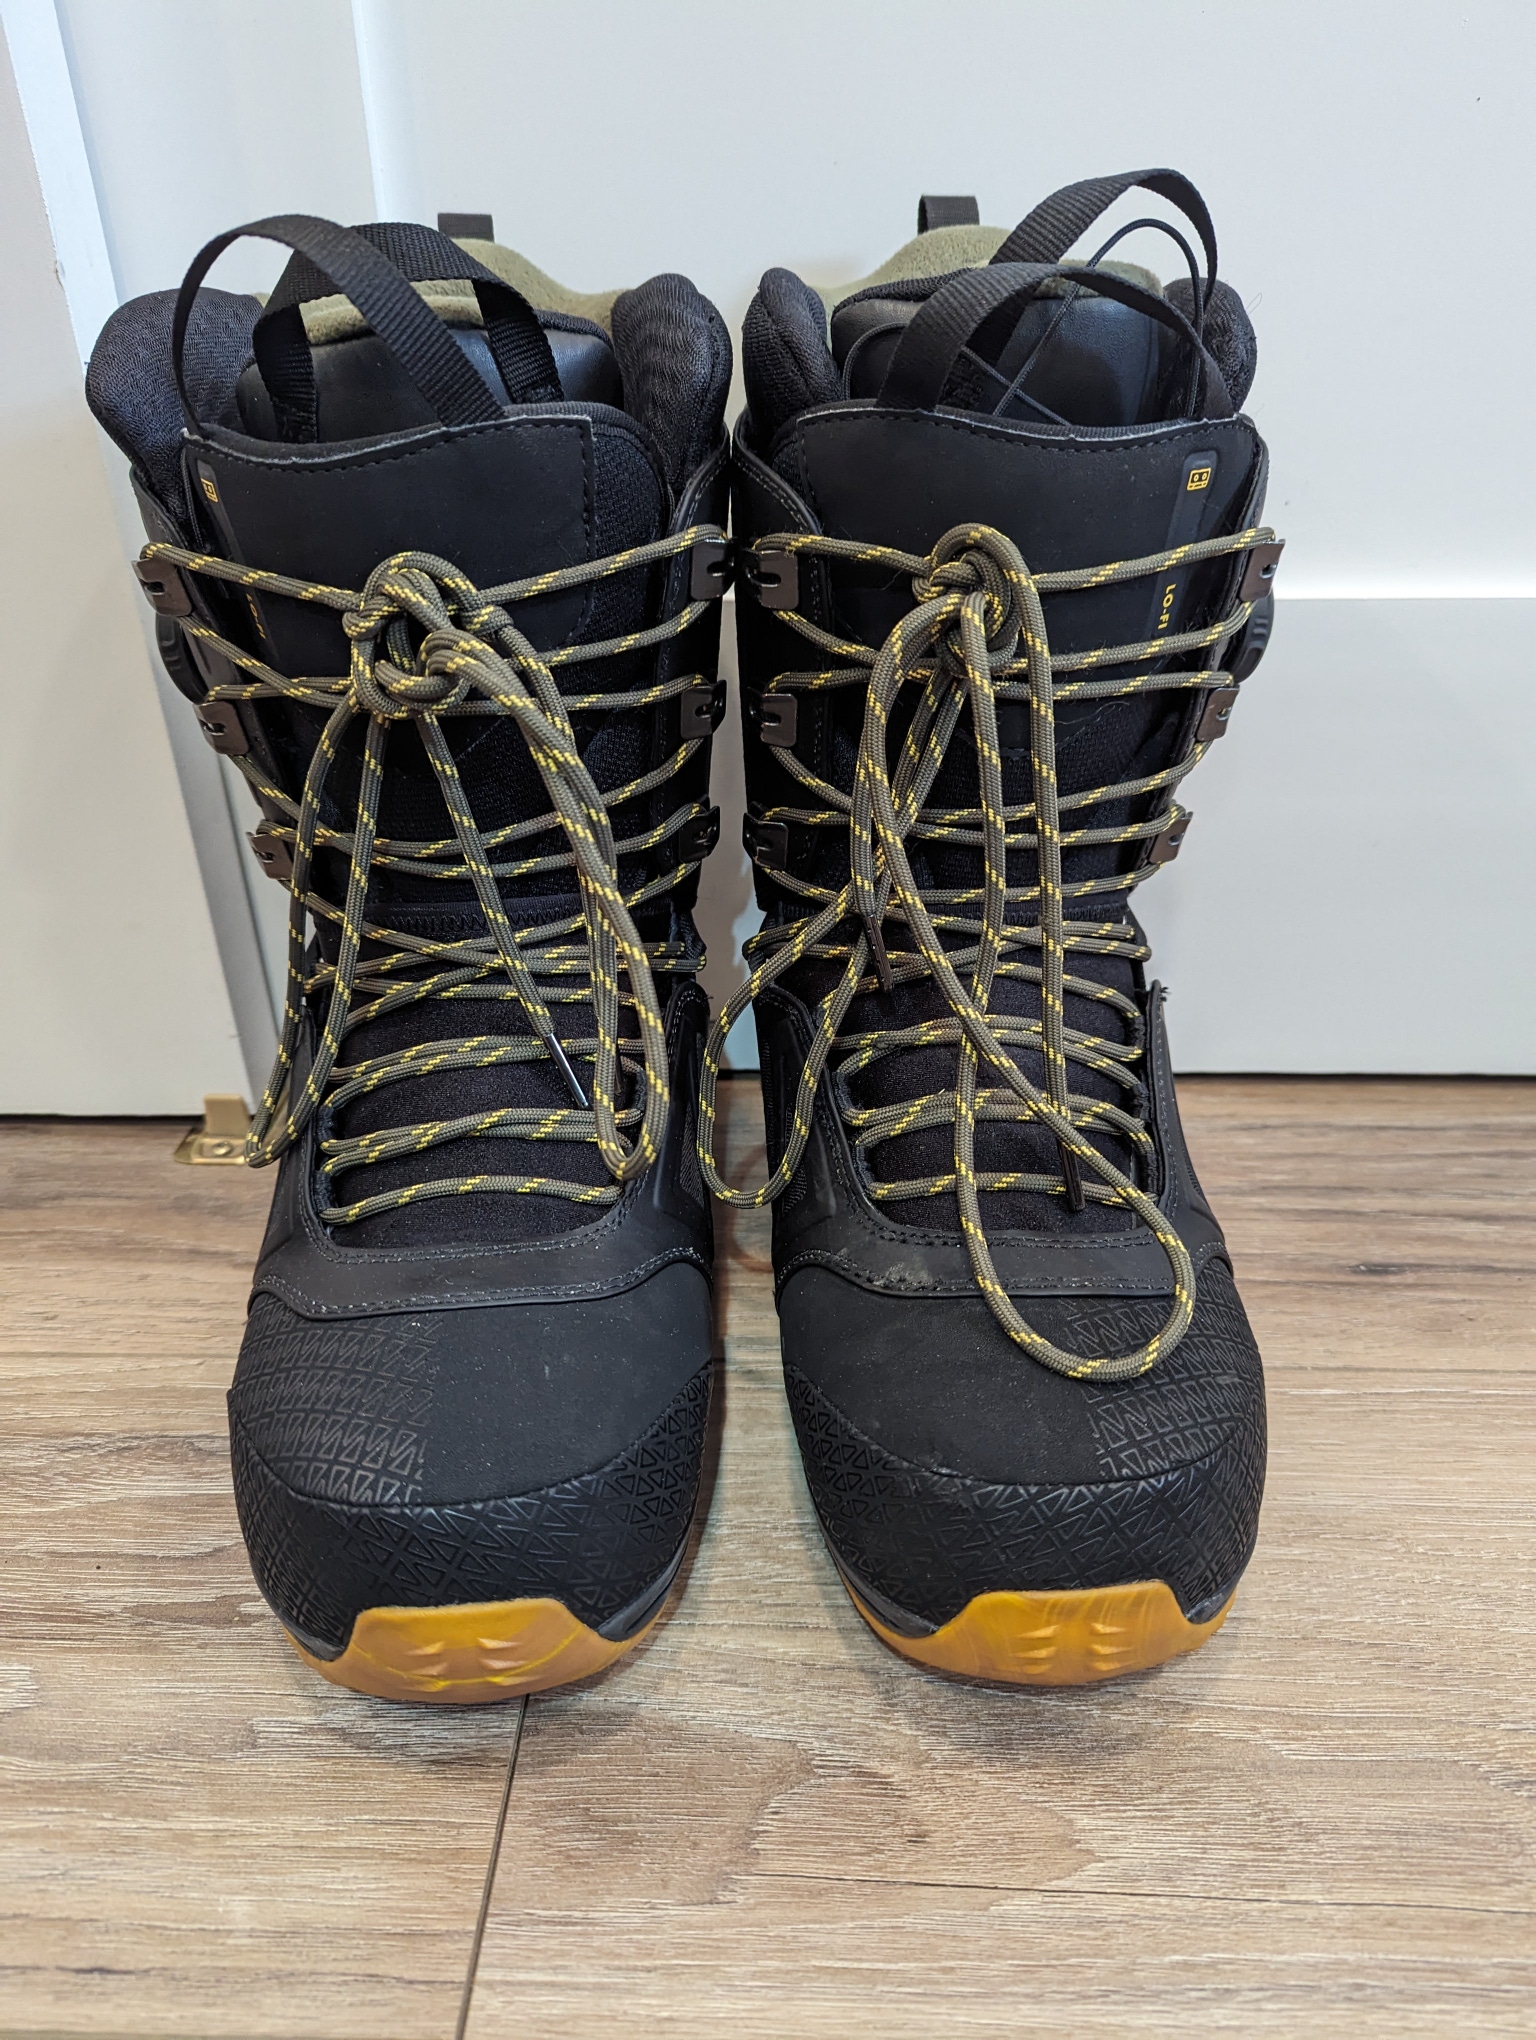 Men's Salomon Snowboard Boots Size 10